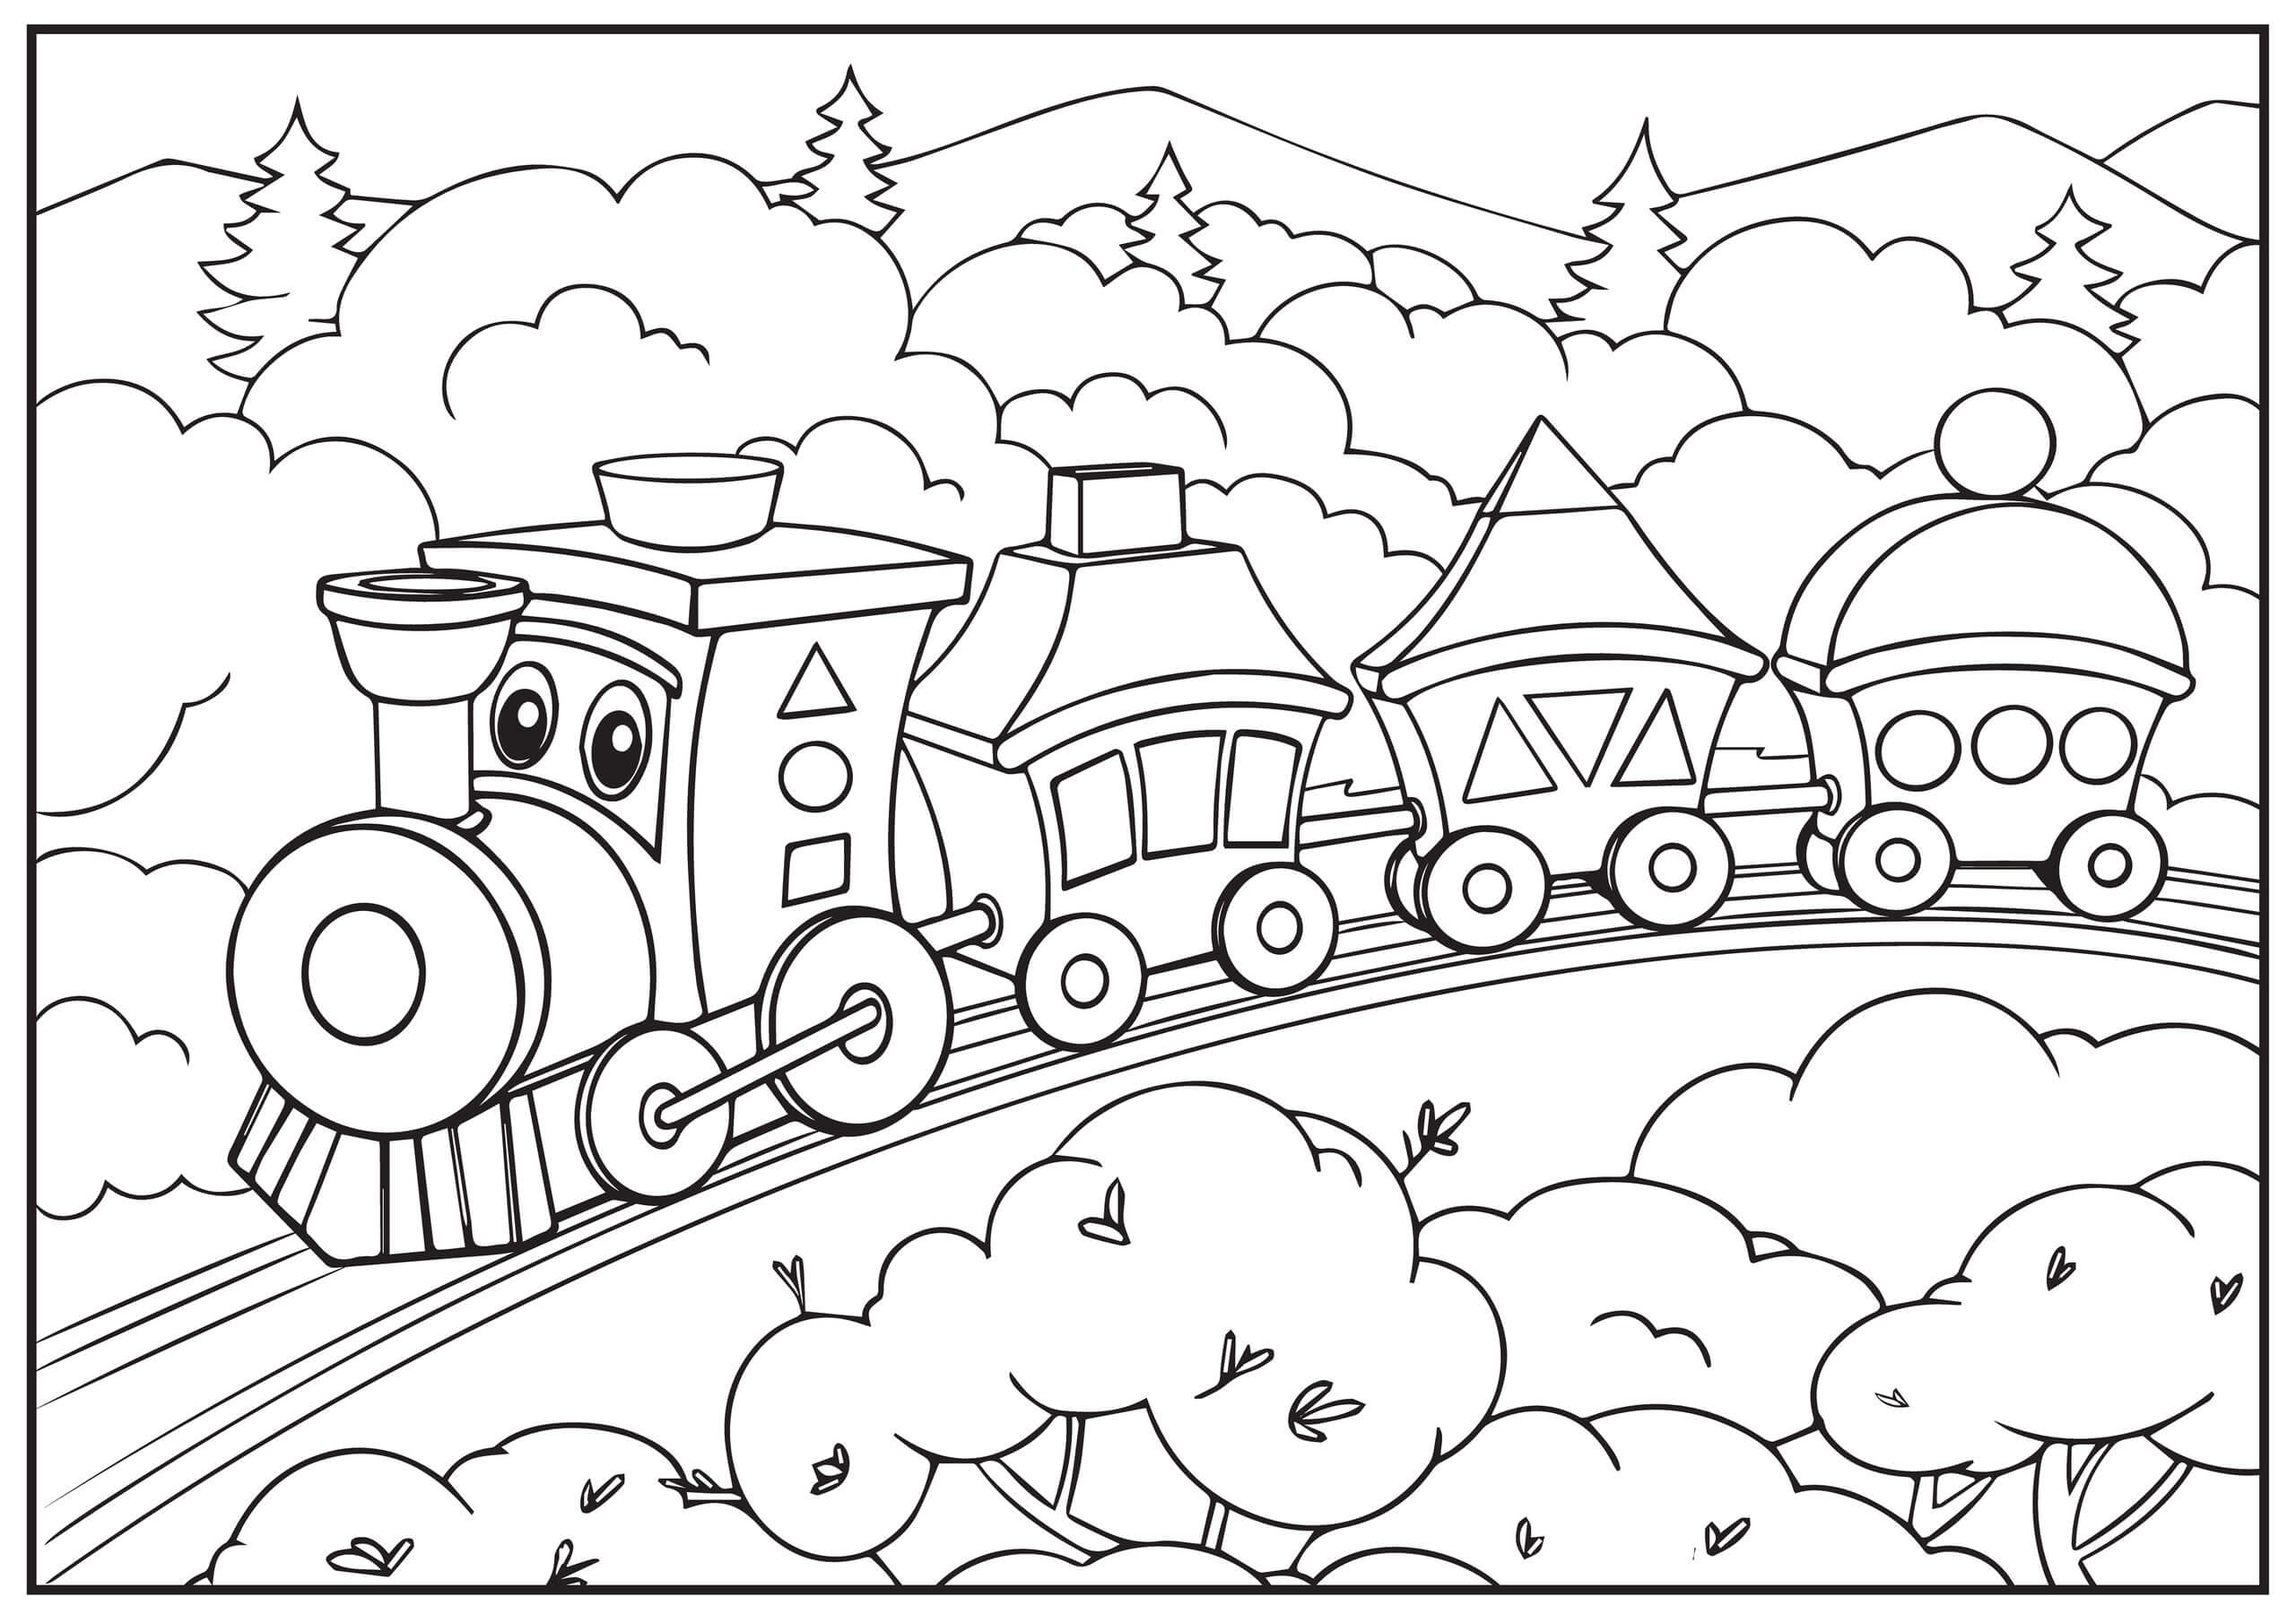 Cartoon train coloring page